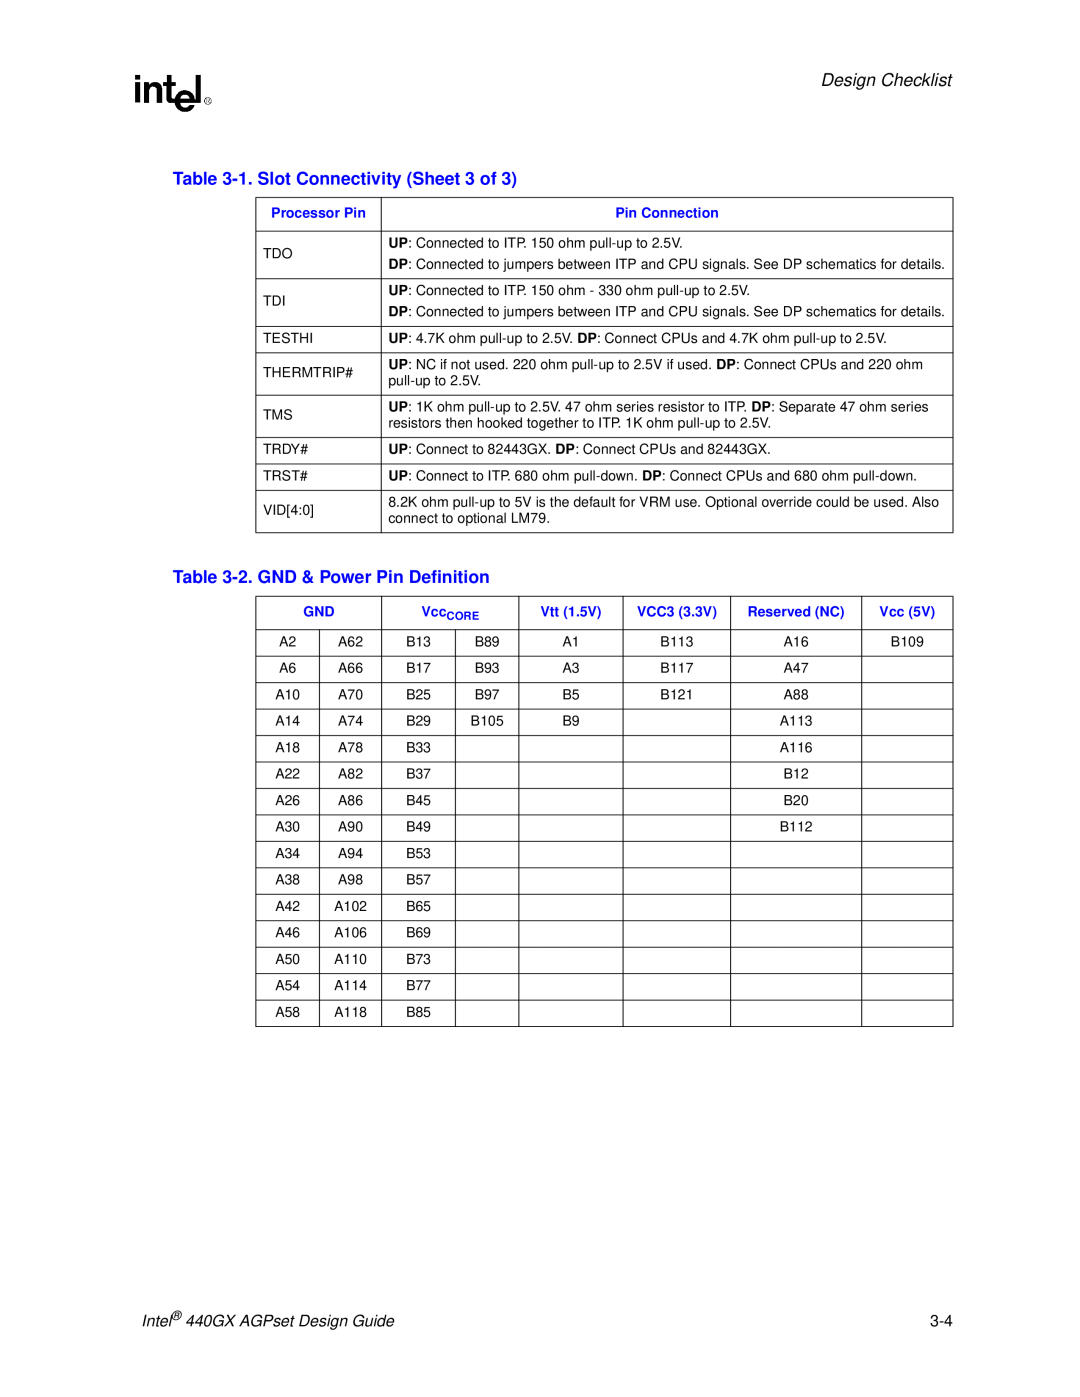 Intel 440GX manual 1. Slot Connectivity Sheet 3 of, 2. GND & Power Pin Definition, Design Checklist 